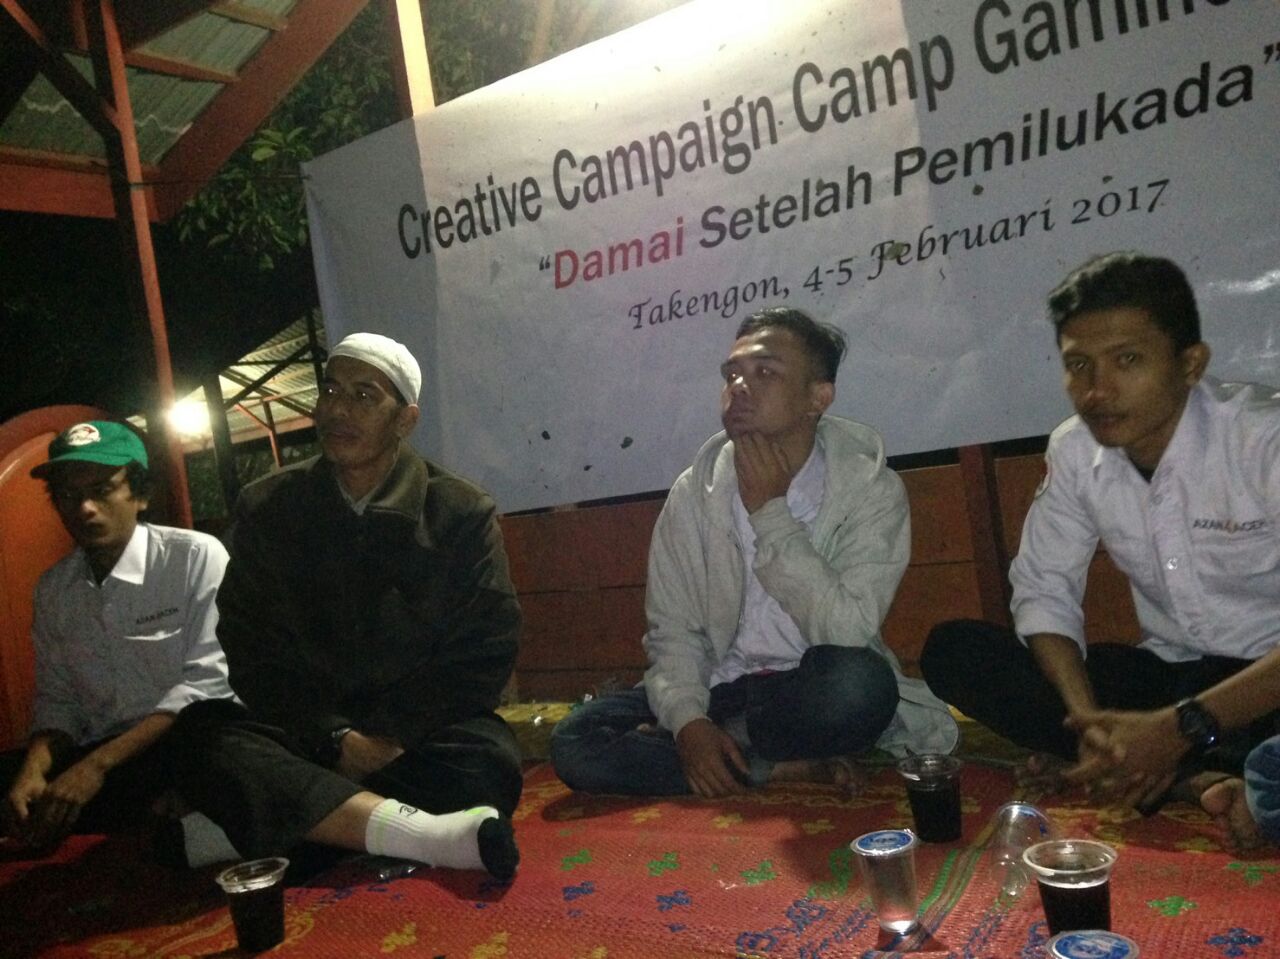 Gaminong Azan laksanakan creative campaign camp